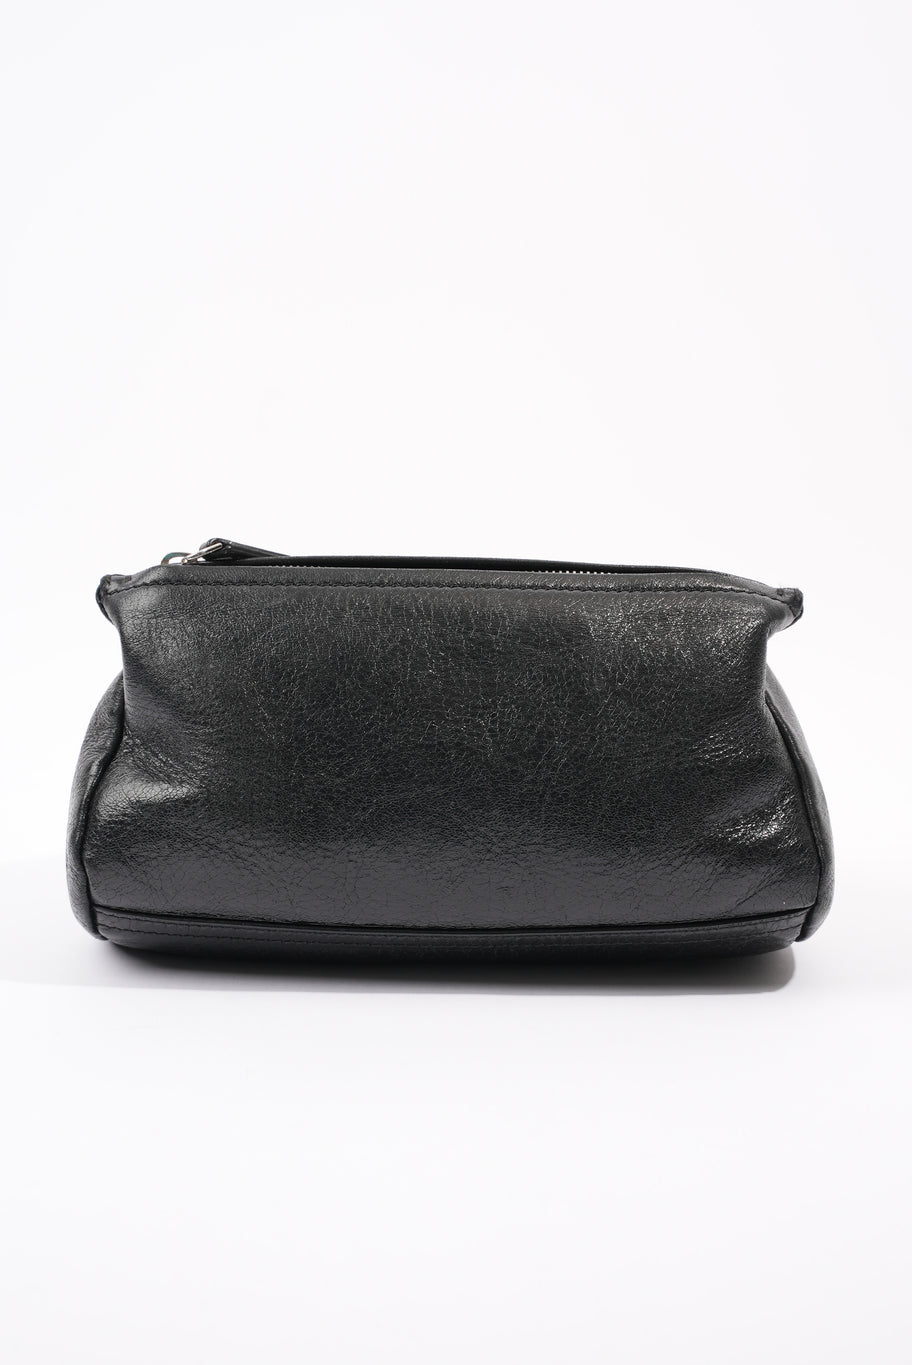 Pandora Bag Black Leather Small Image 6